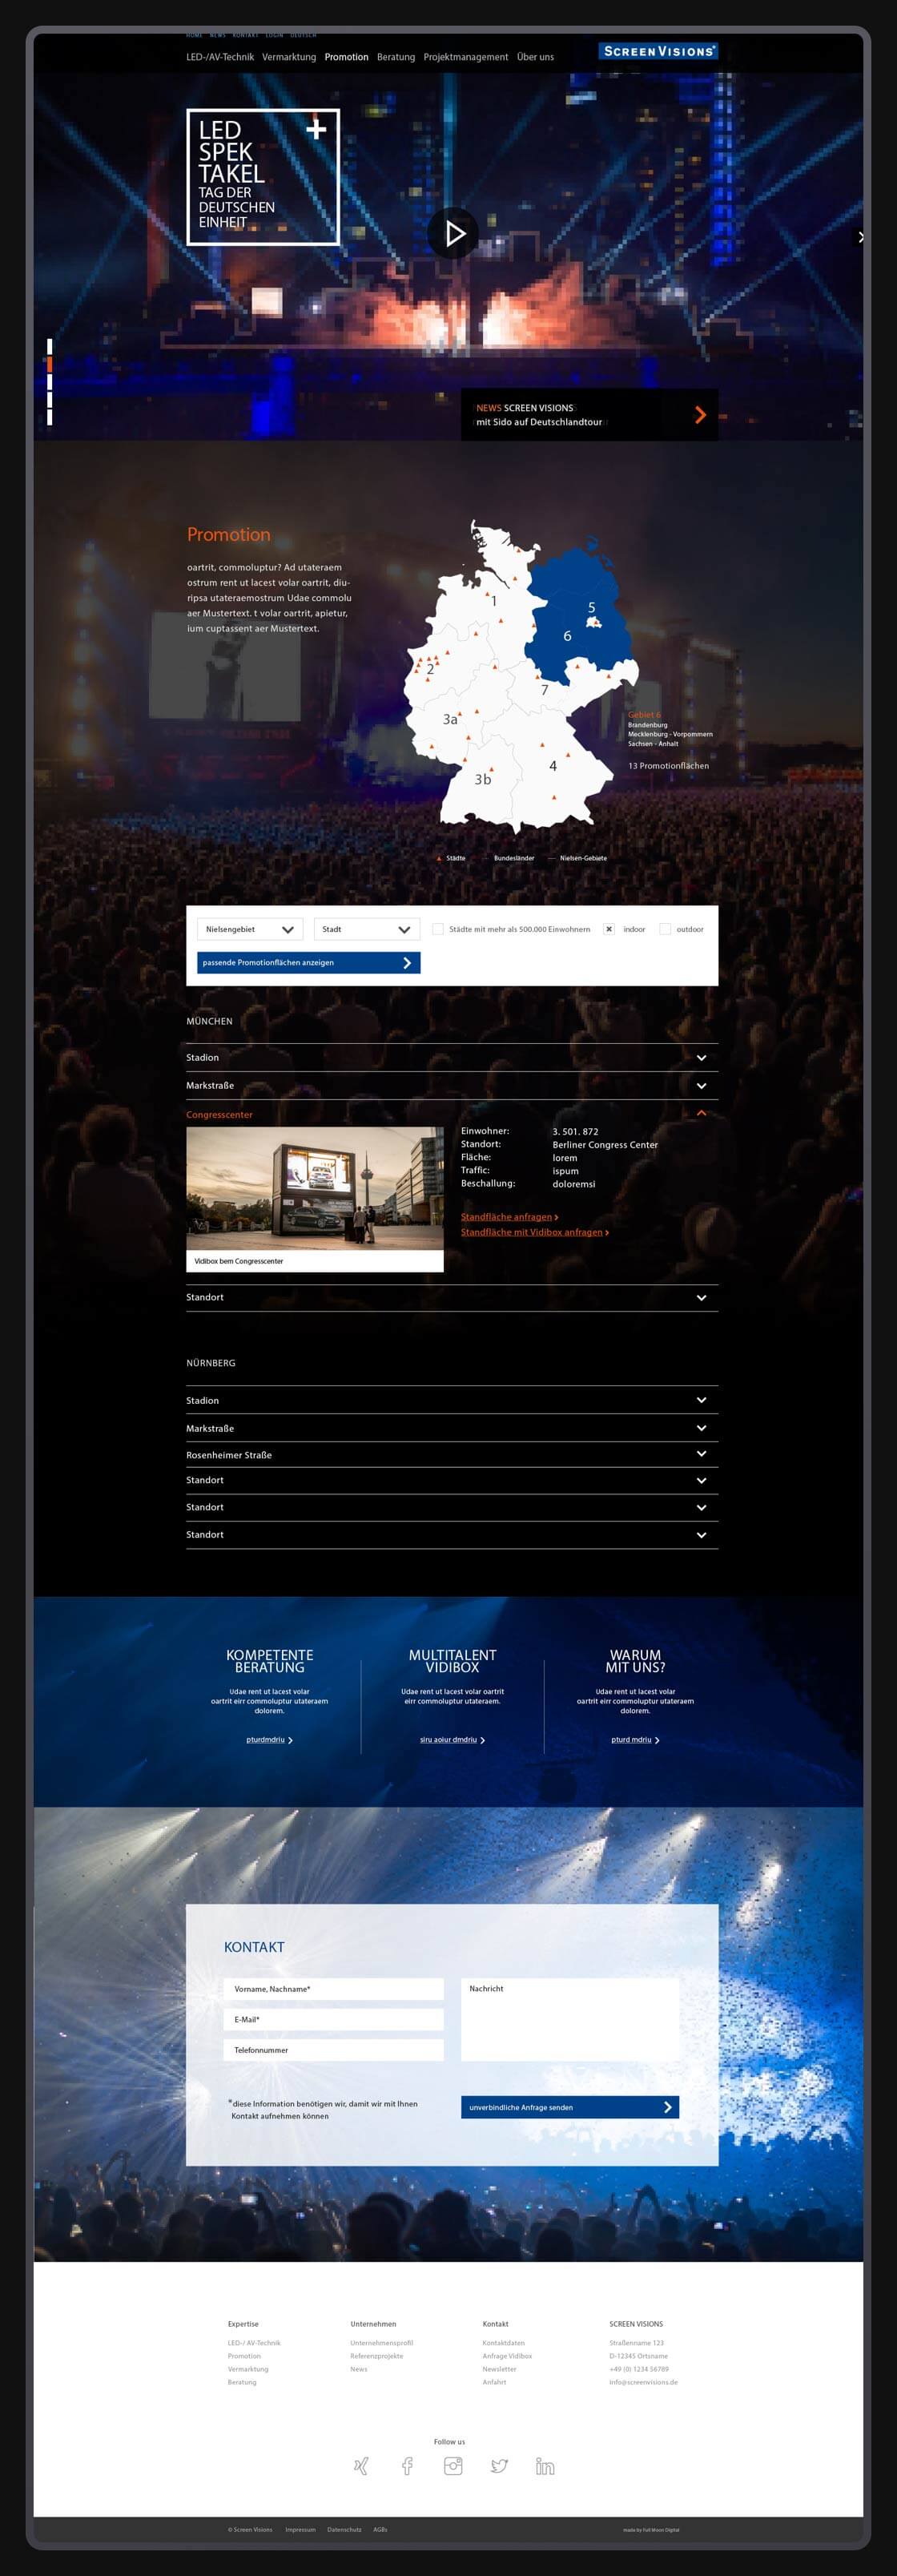  Referenz - Screen Visions - Website Relaunch